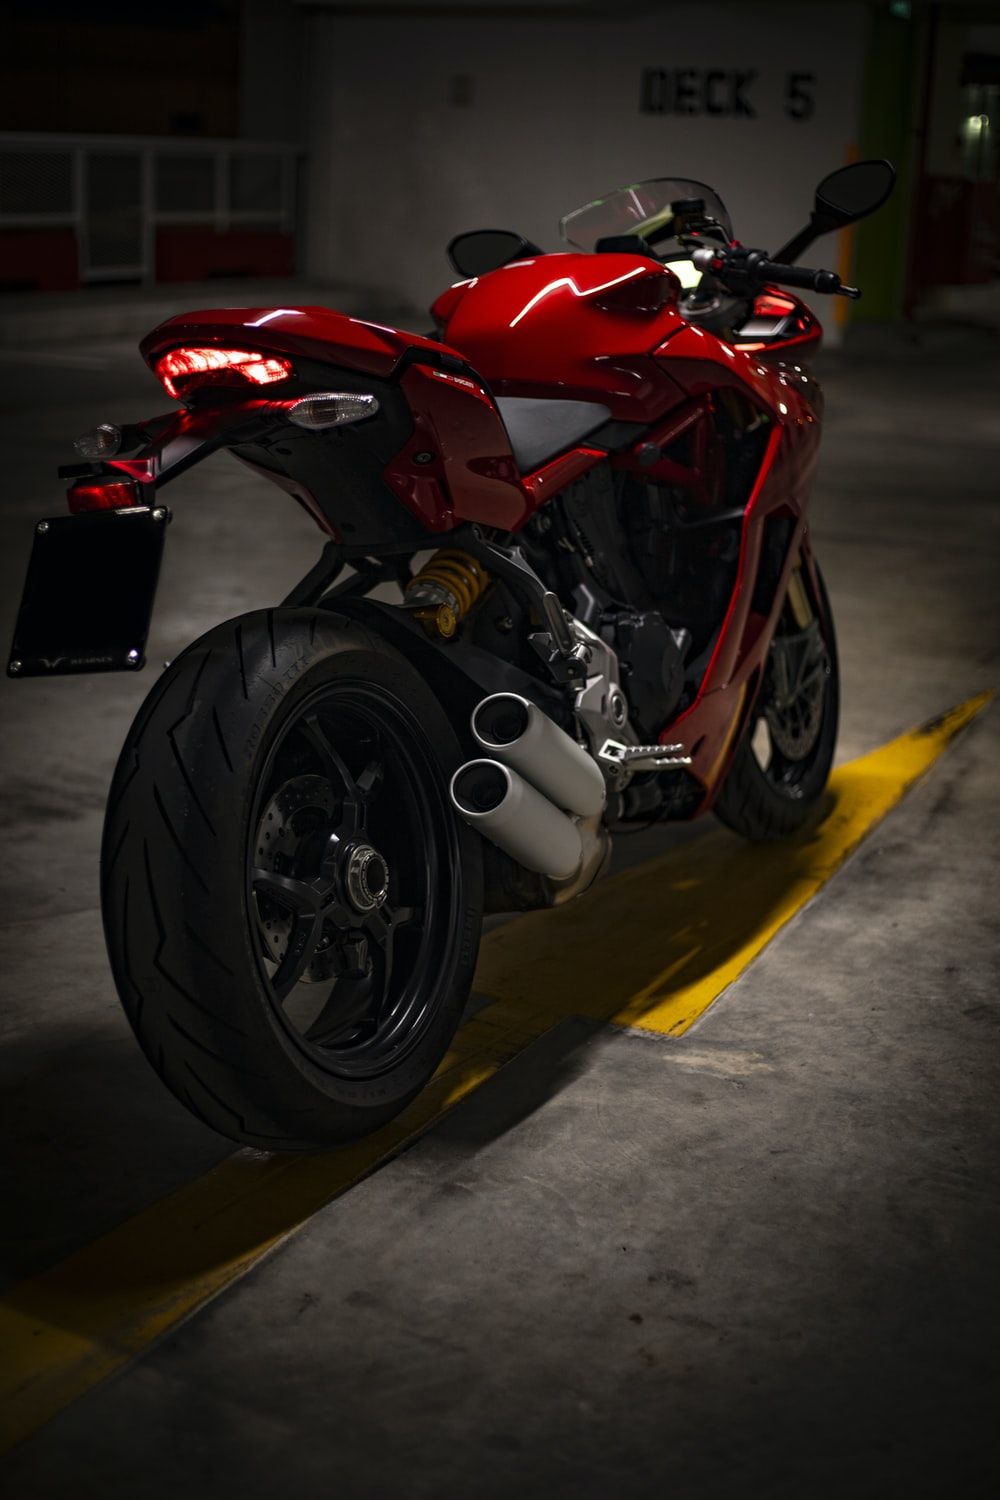 Motorcycle Garage Picture. Download Free Image